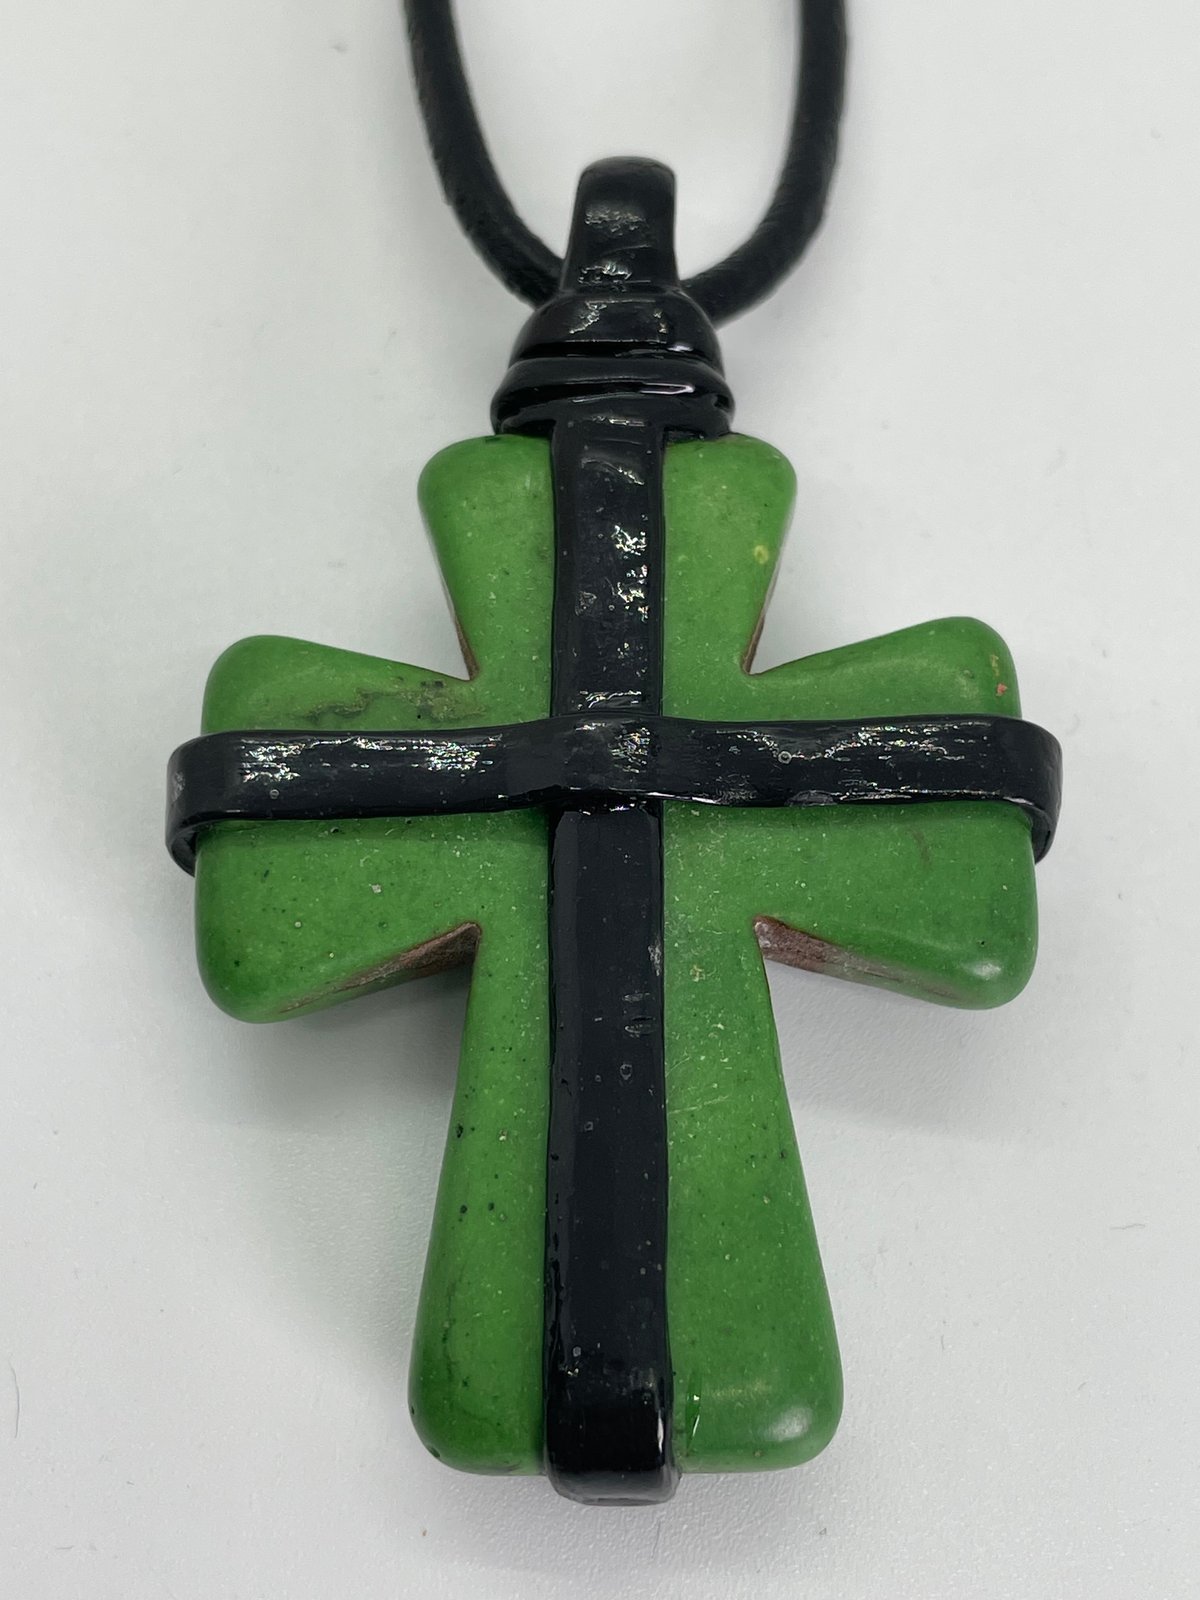 Green Agate cross set in black